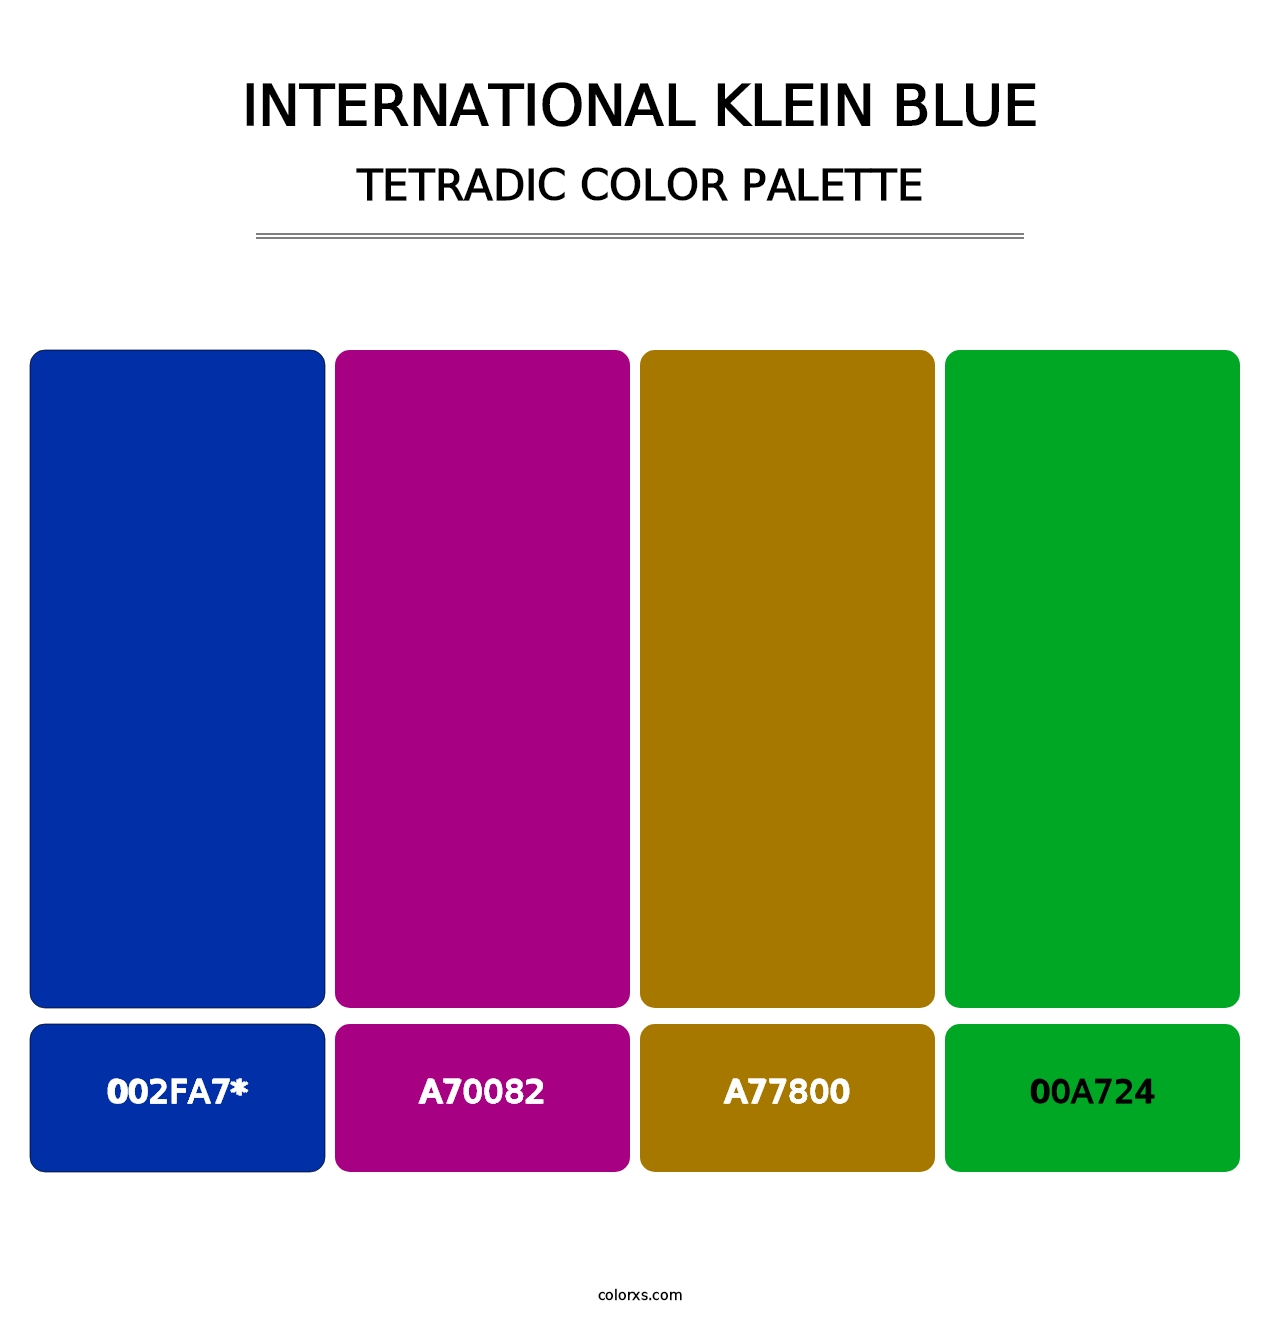 International Klein Blue - Tetradic Color Palette